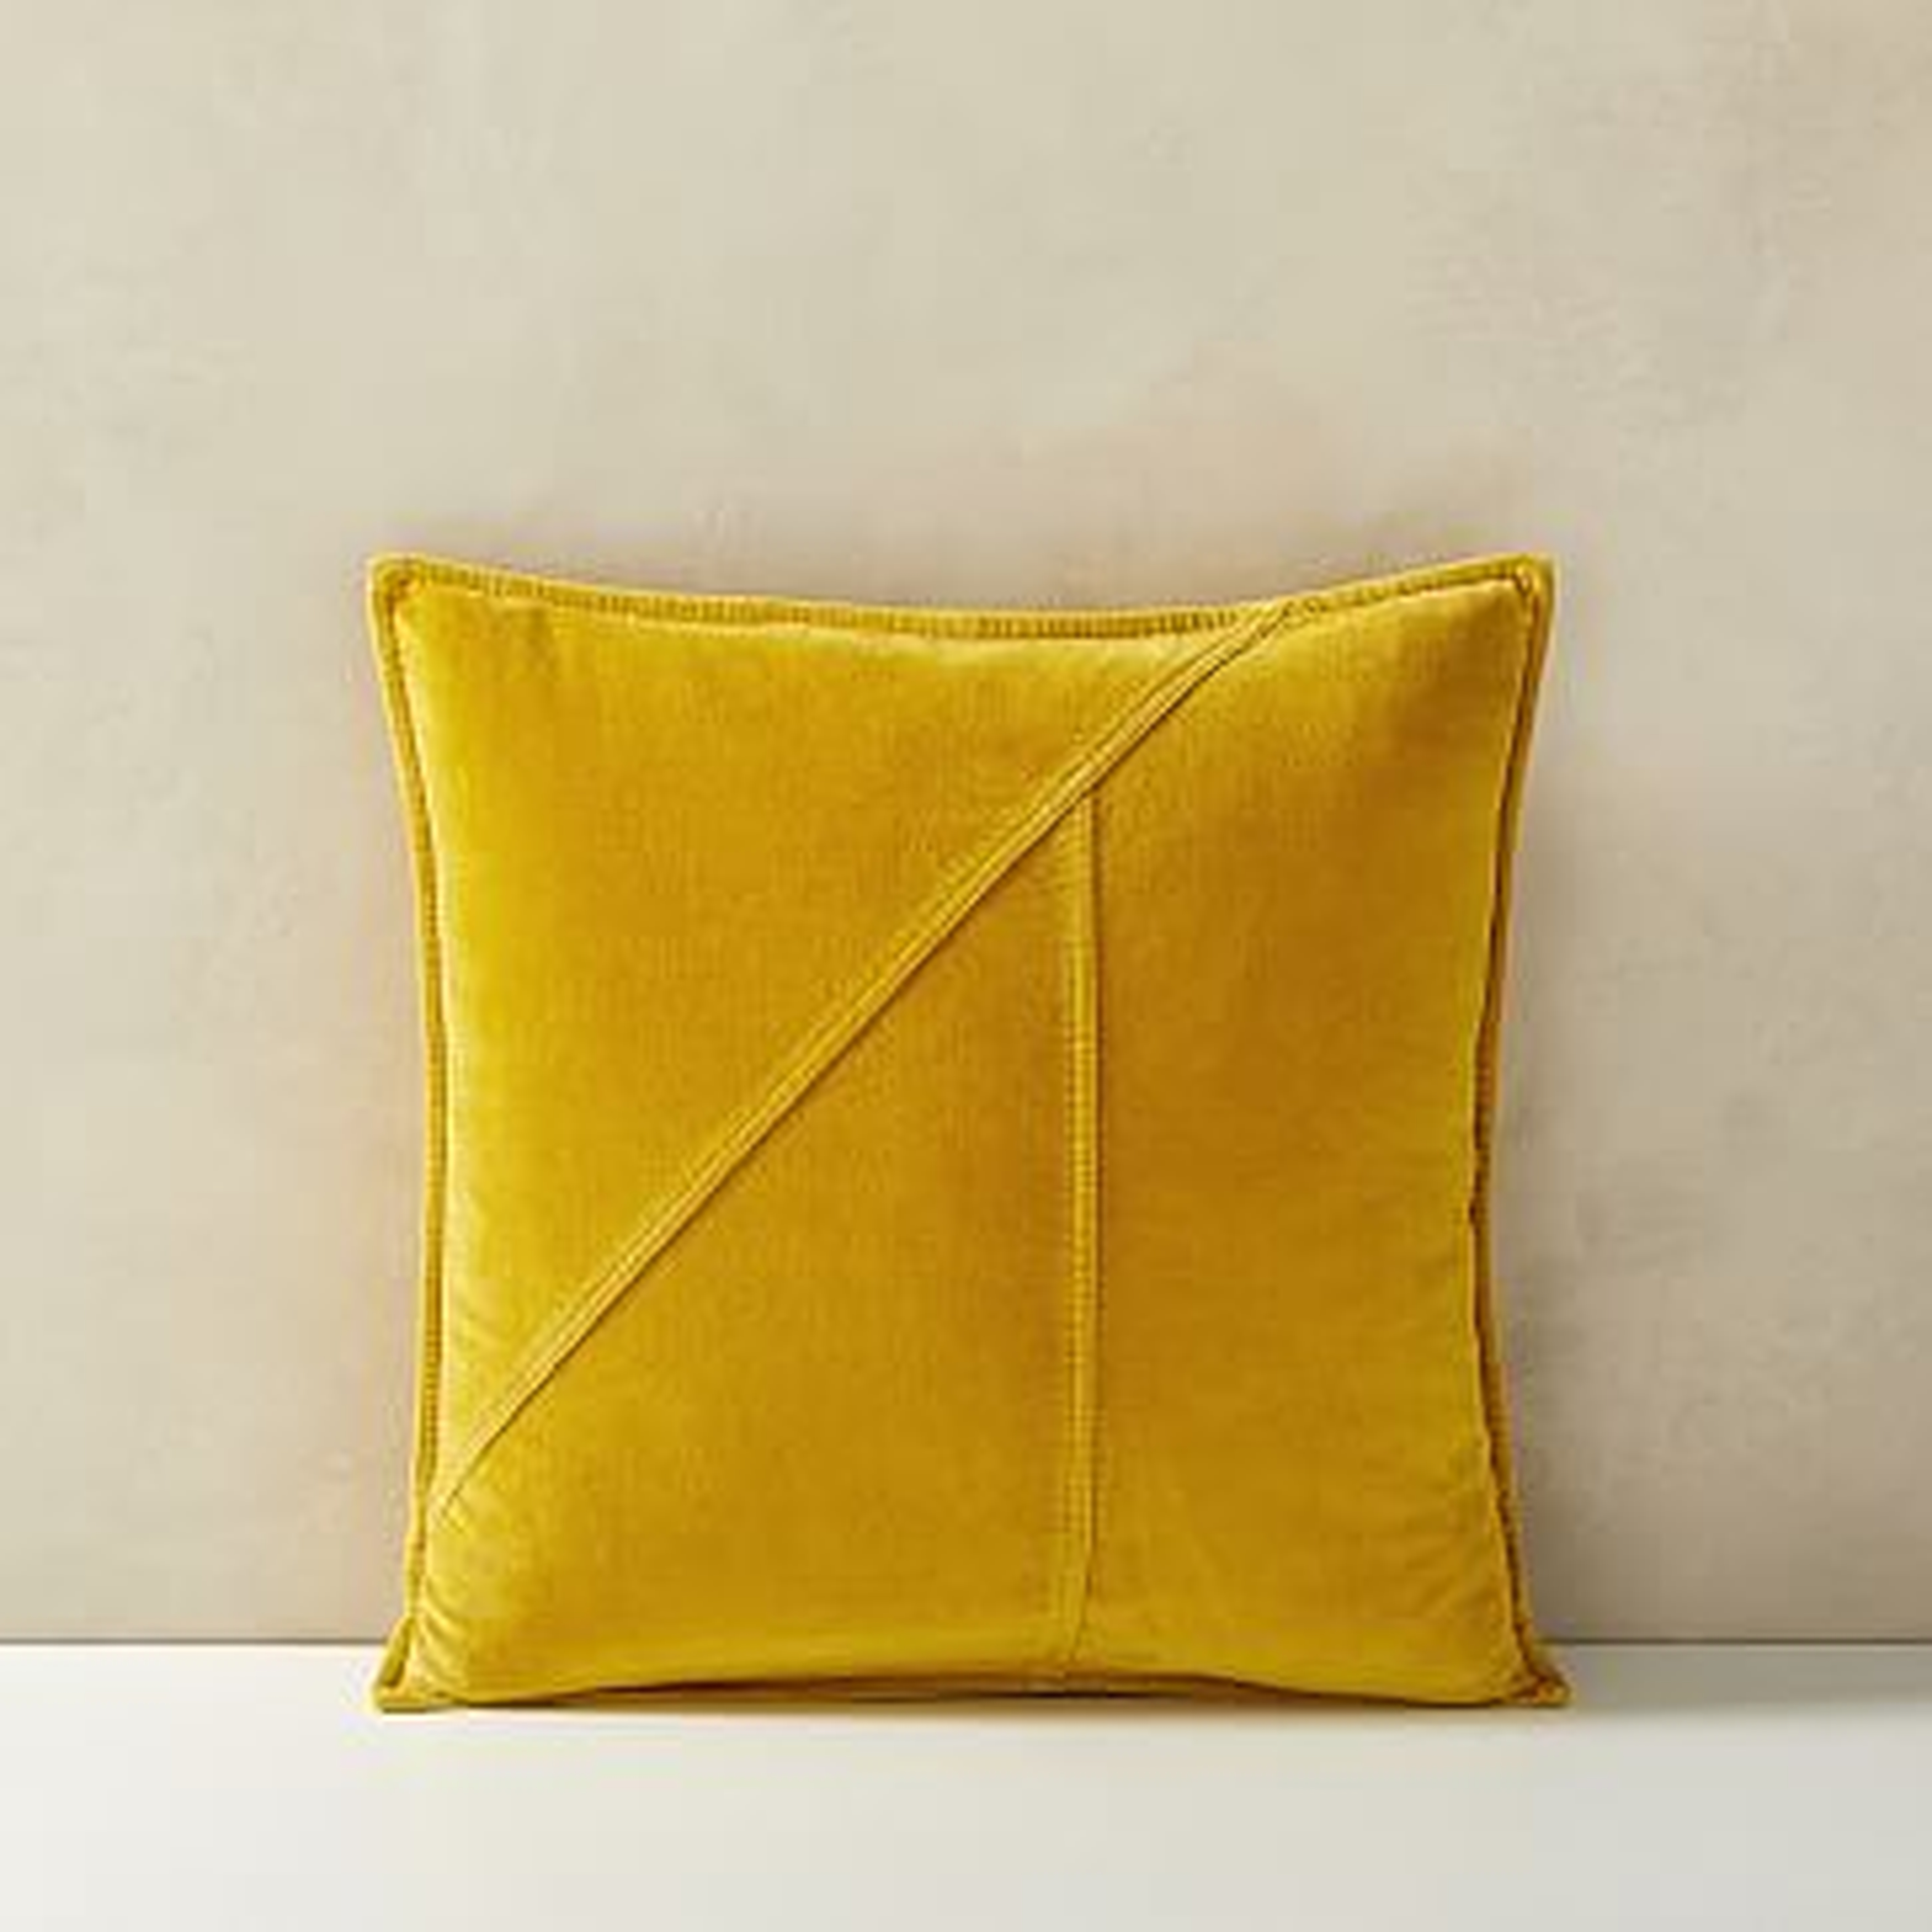 Washed Cotton Velvet Pillow Cover, 18"x18", Dark Horseradish - West Elm